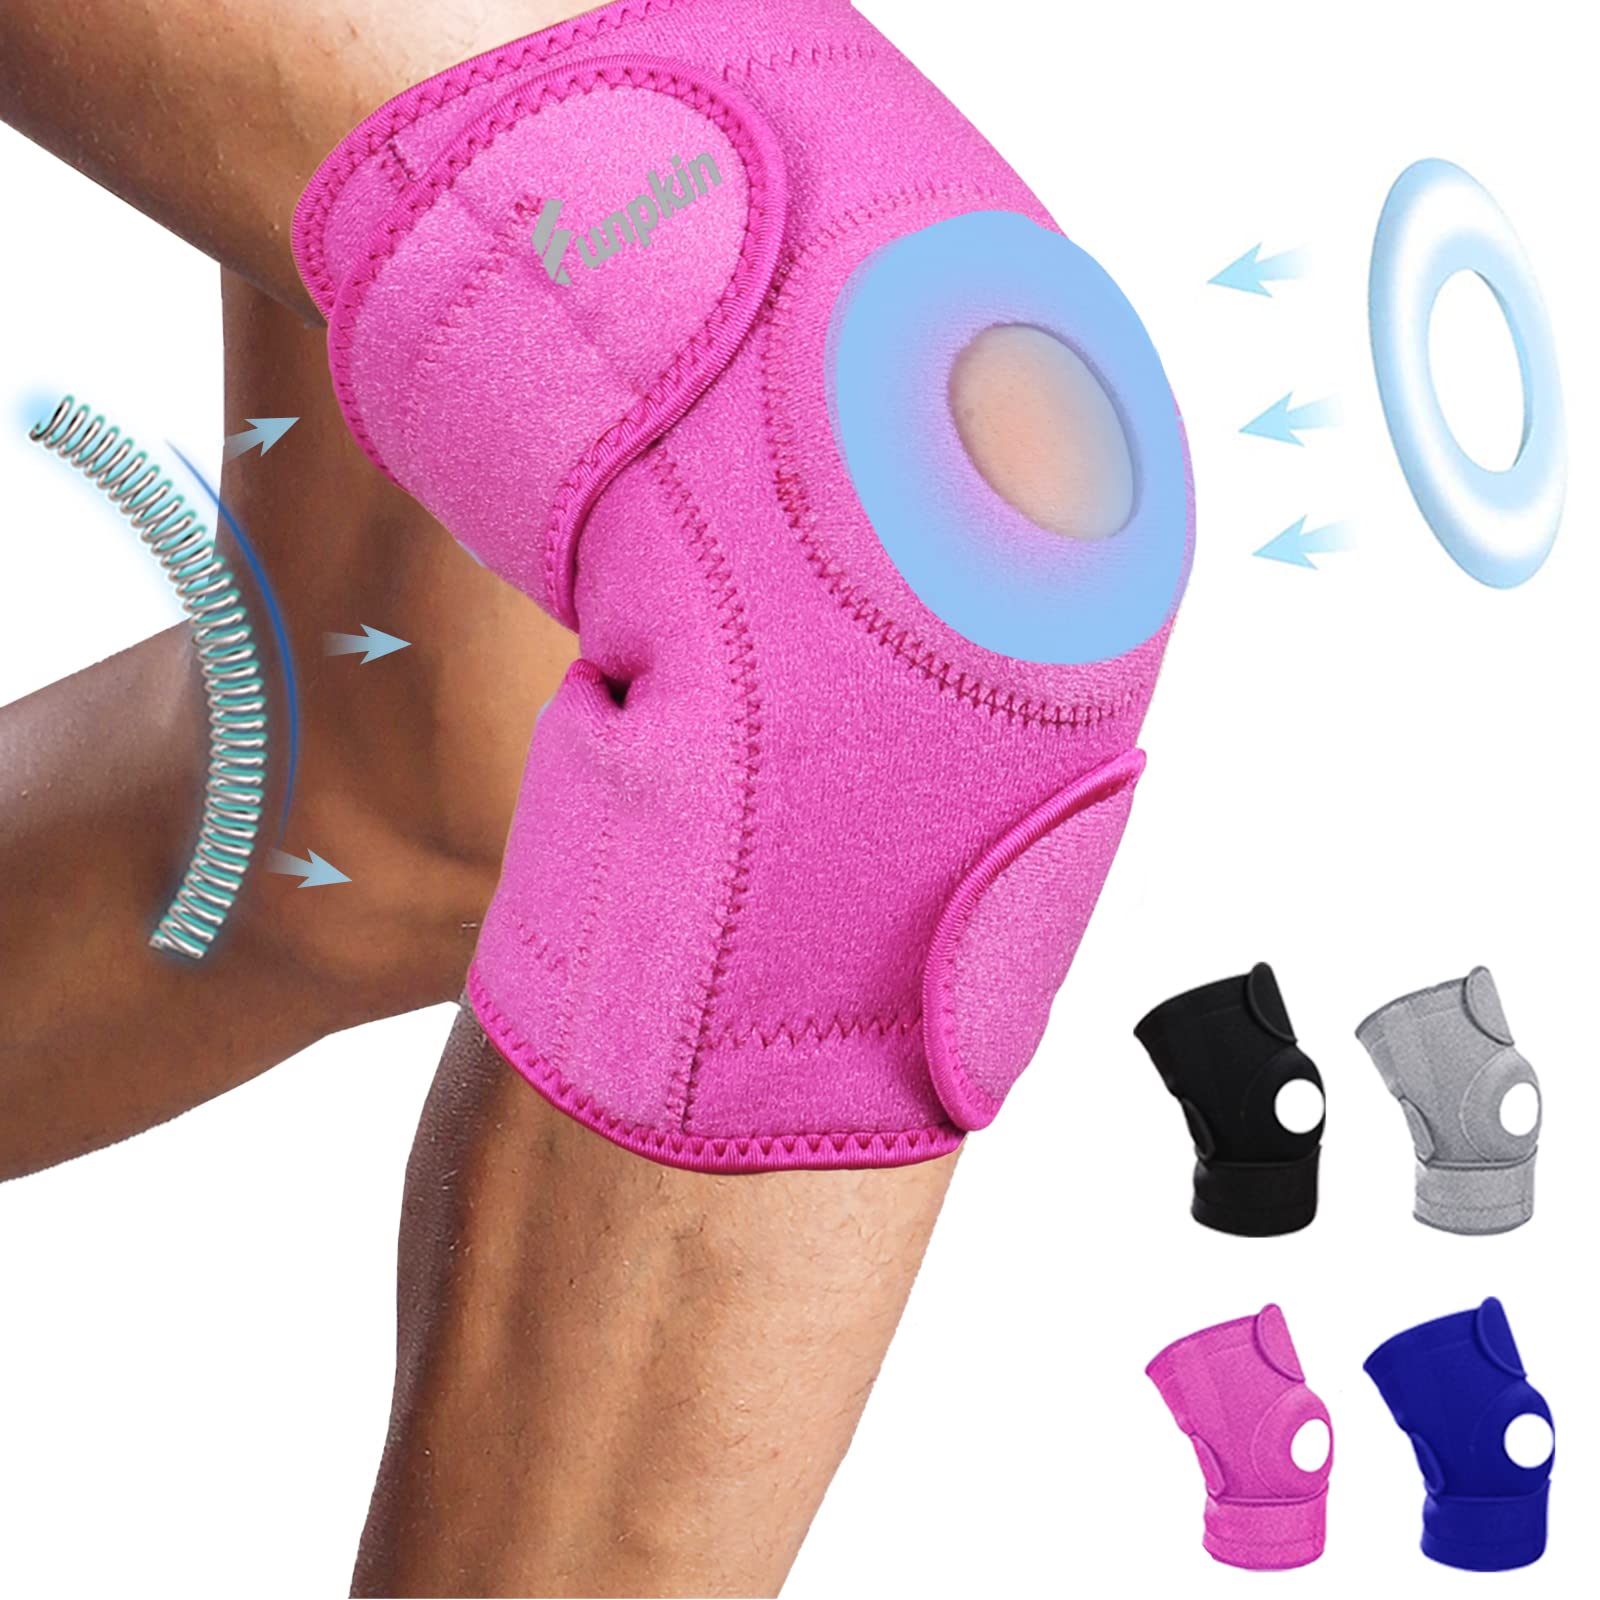 Knee Brace for Women Knee Pain - Adjustable Pink Knee Support